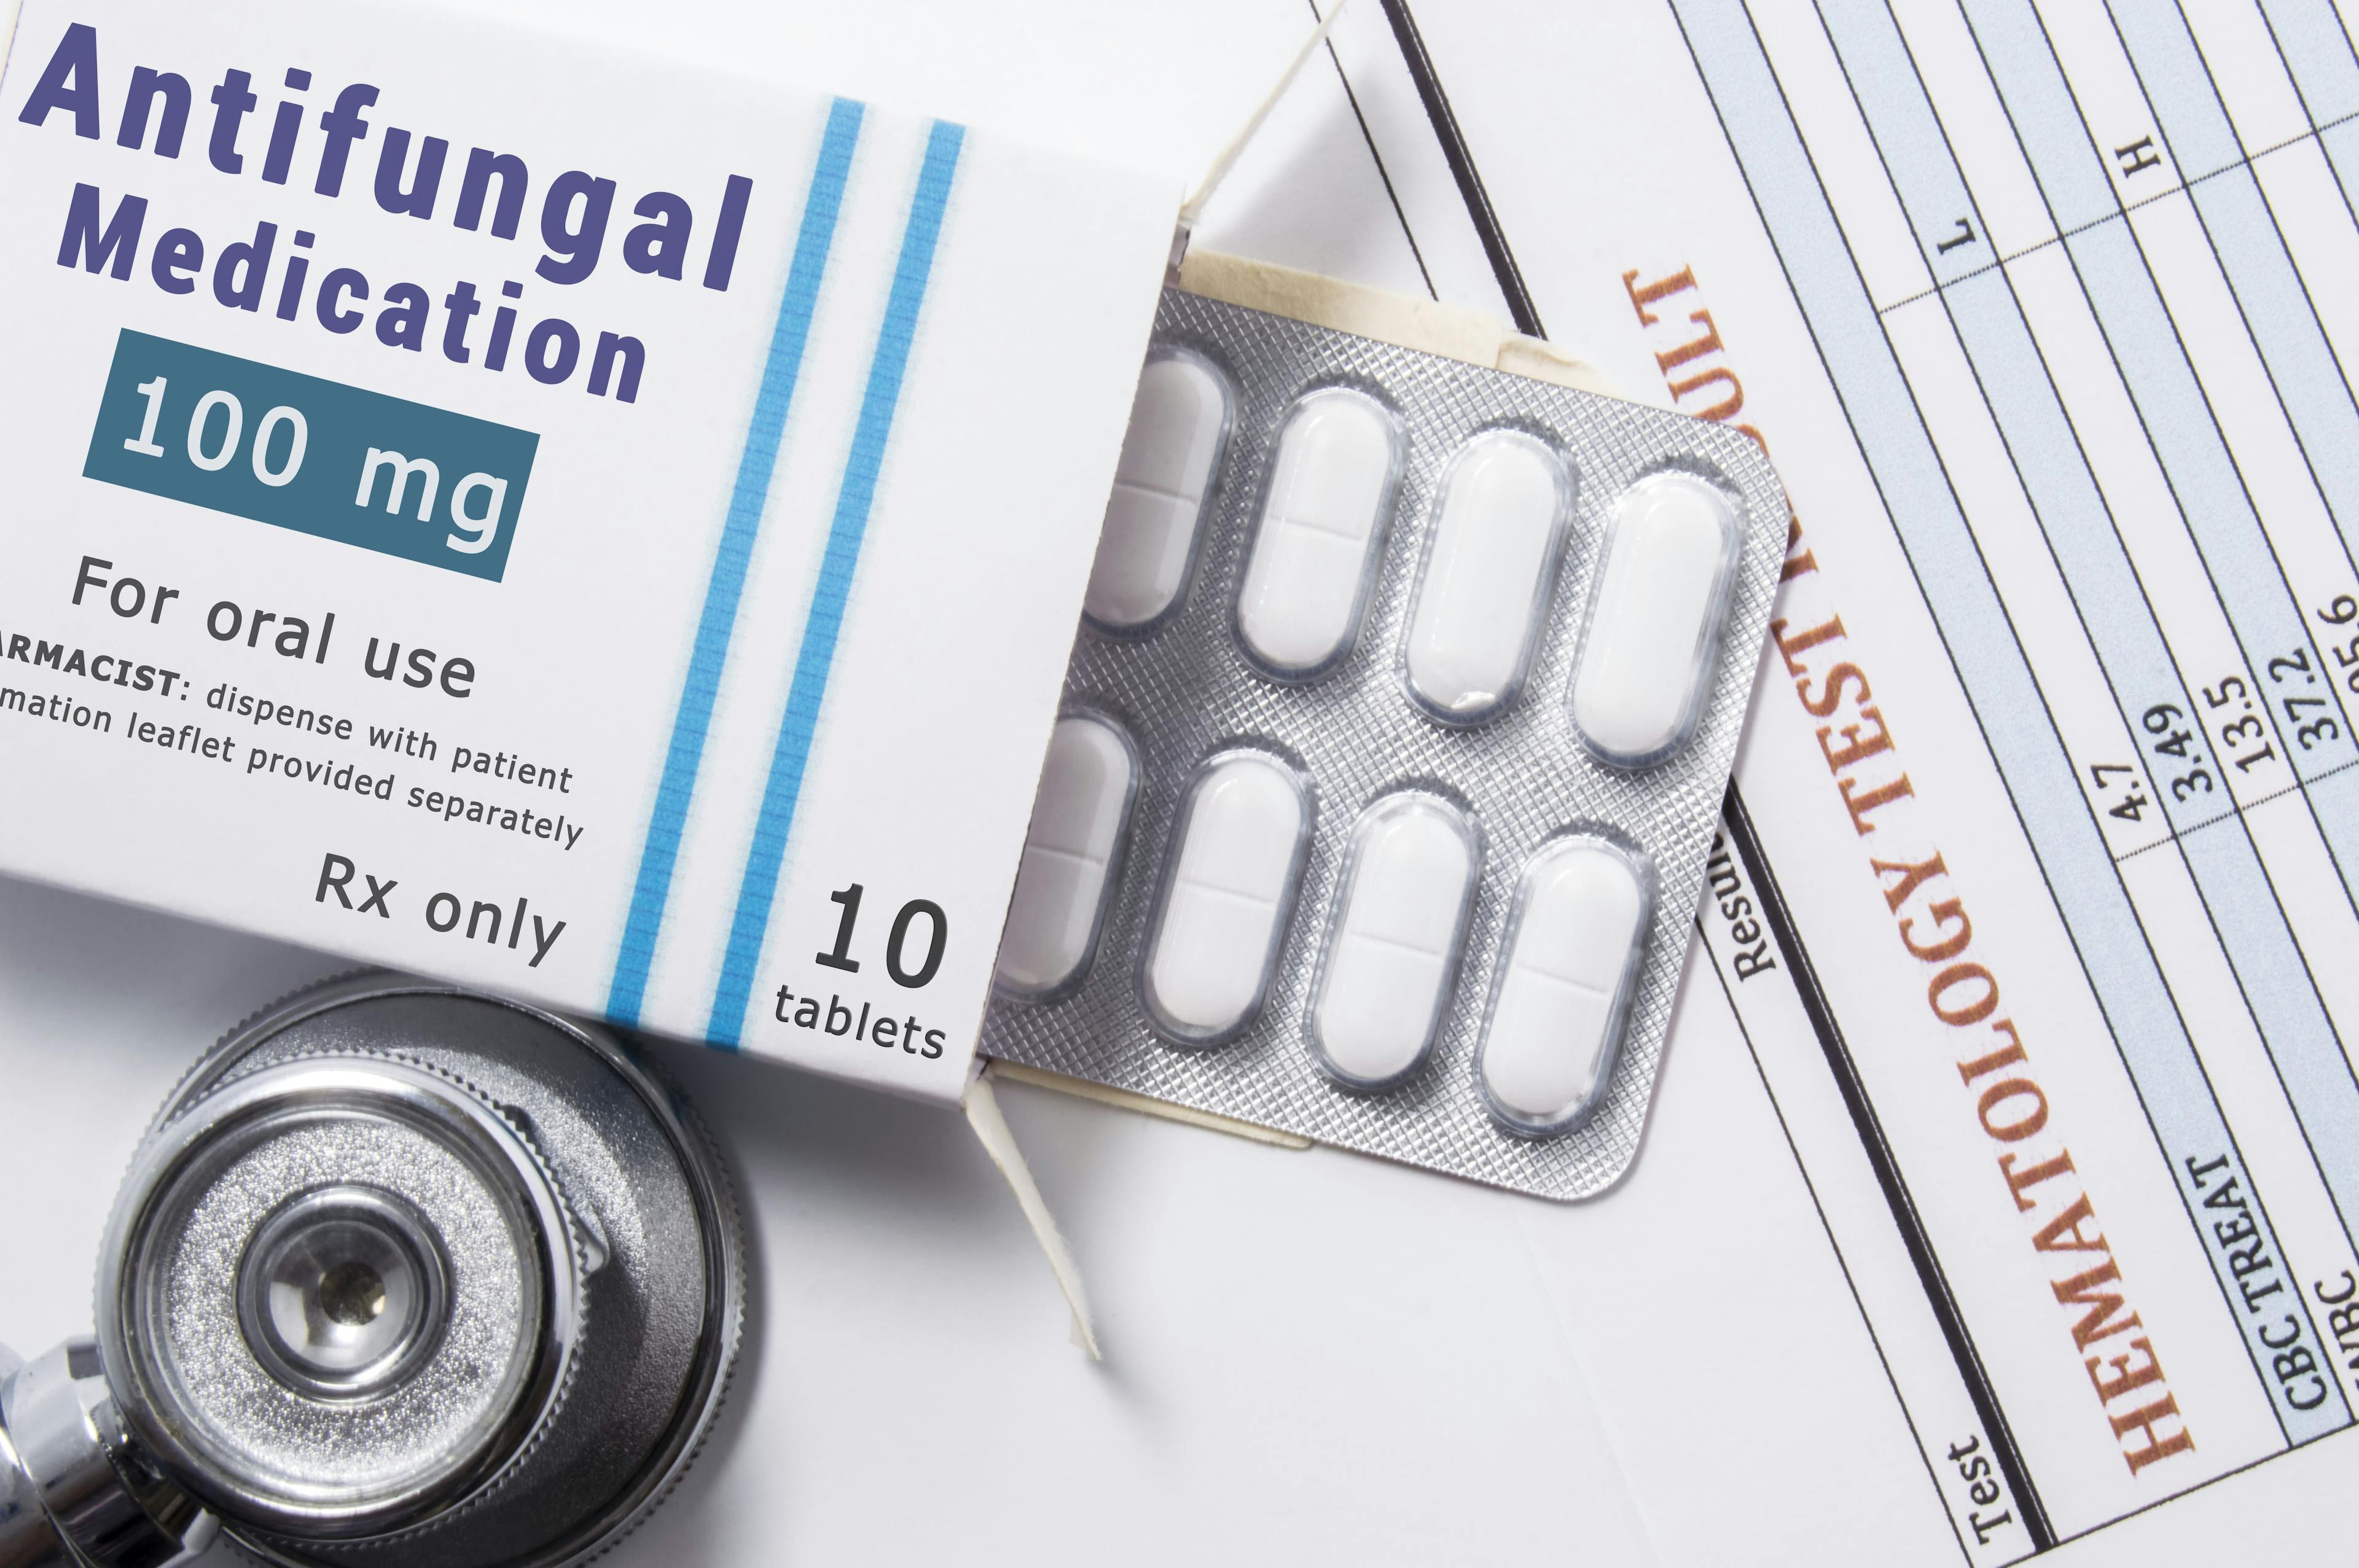 antifungal medication